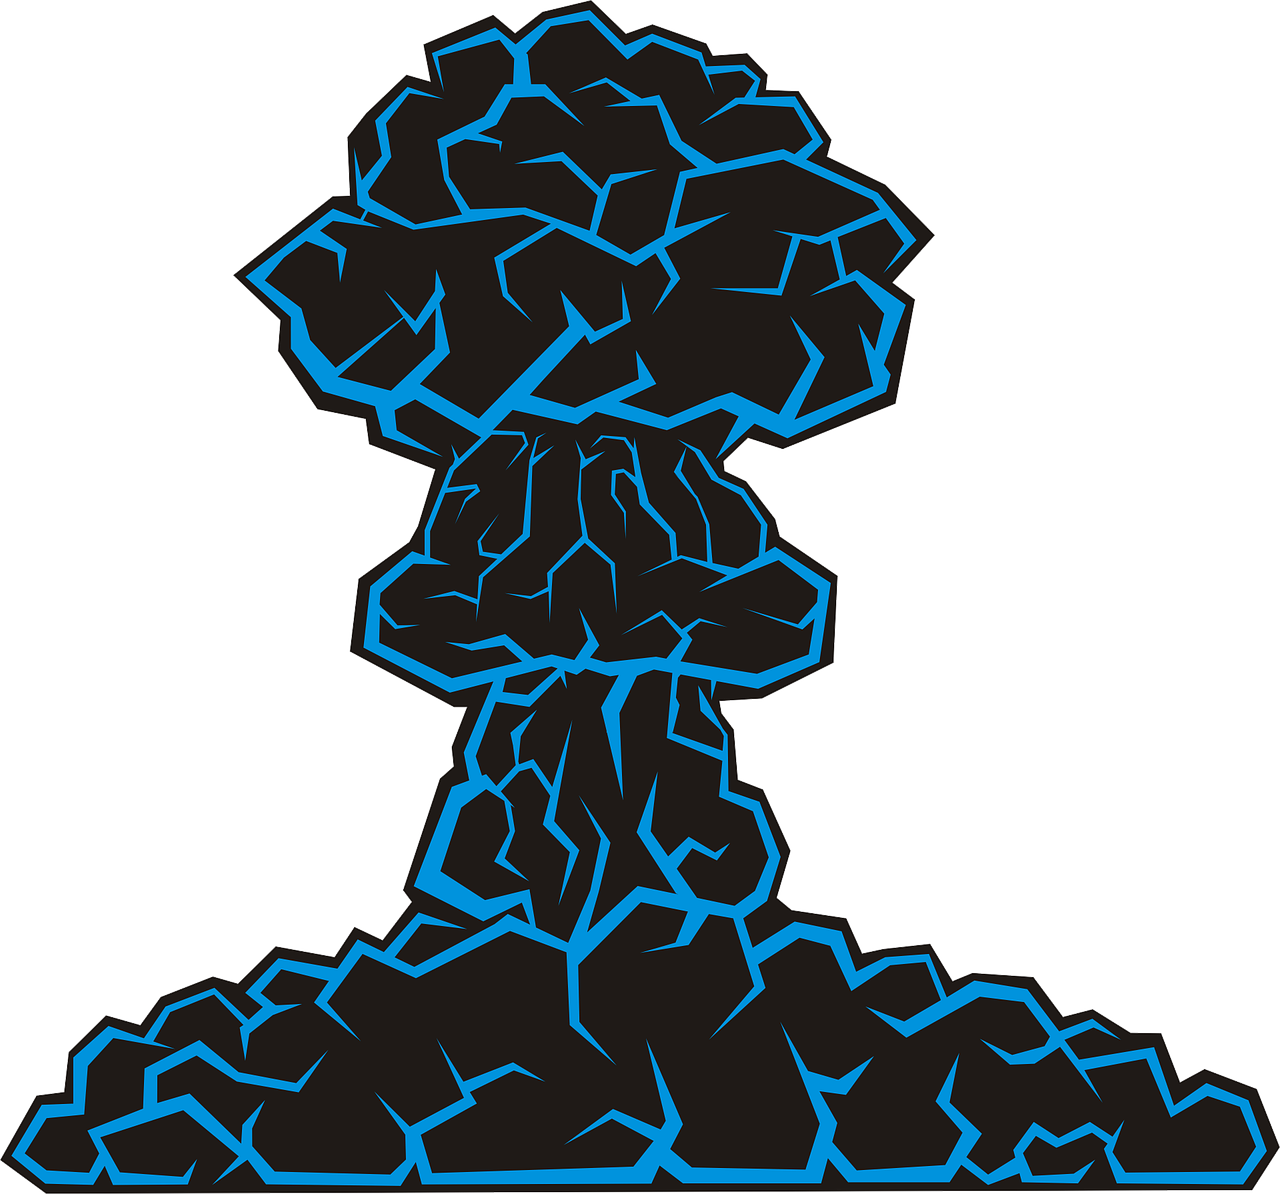 hiroshima mushroom cloud atomic bomb free photo